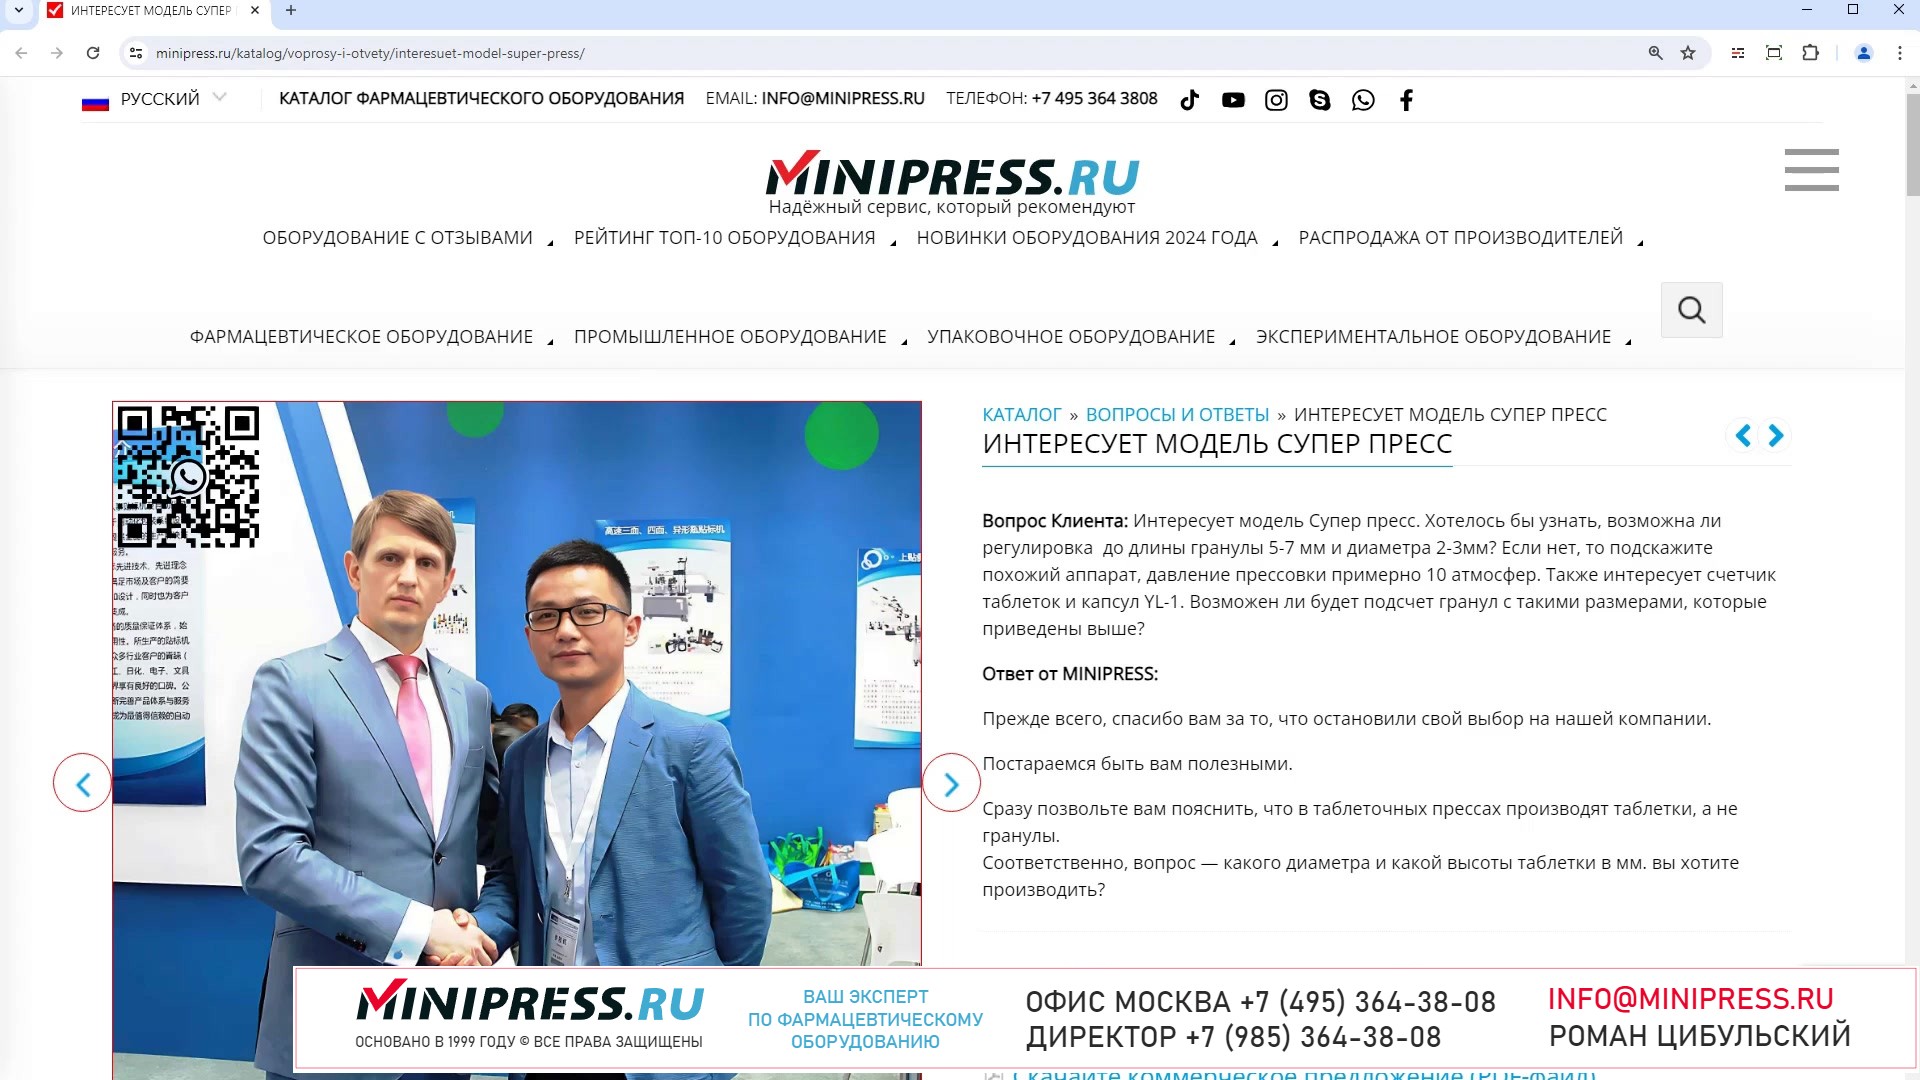 Minipress.ru Интересует модель Супер пресс